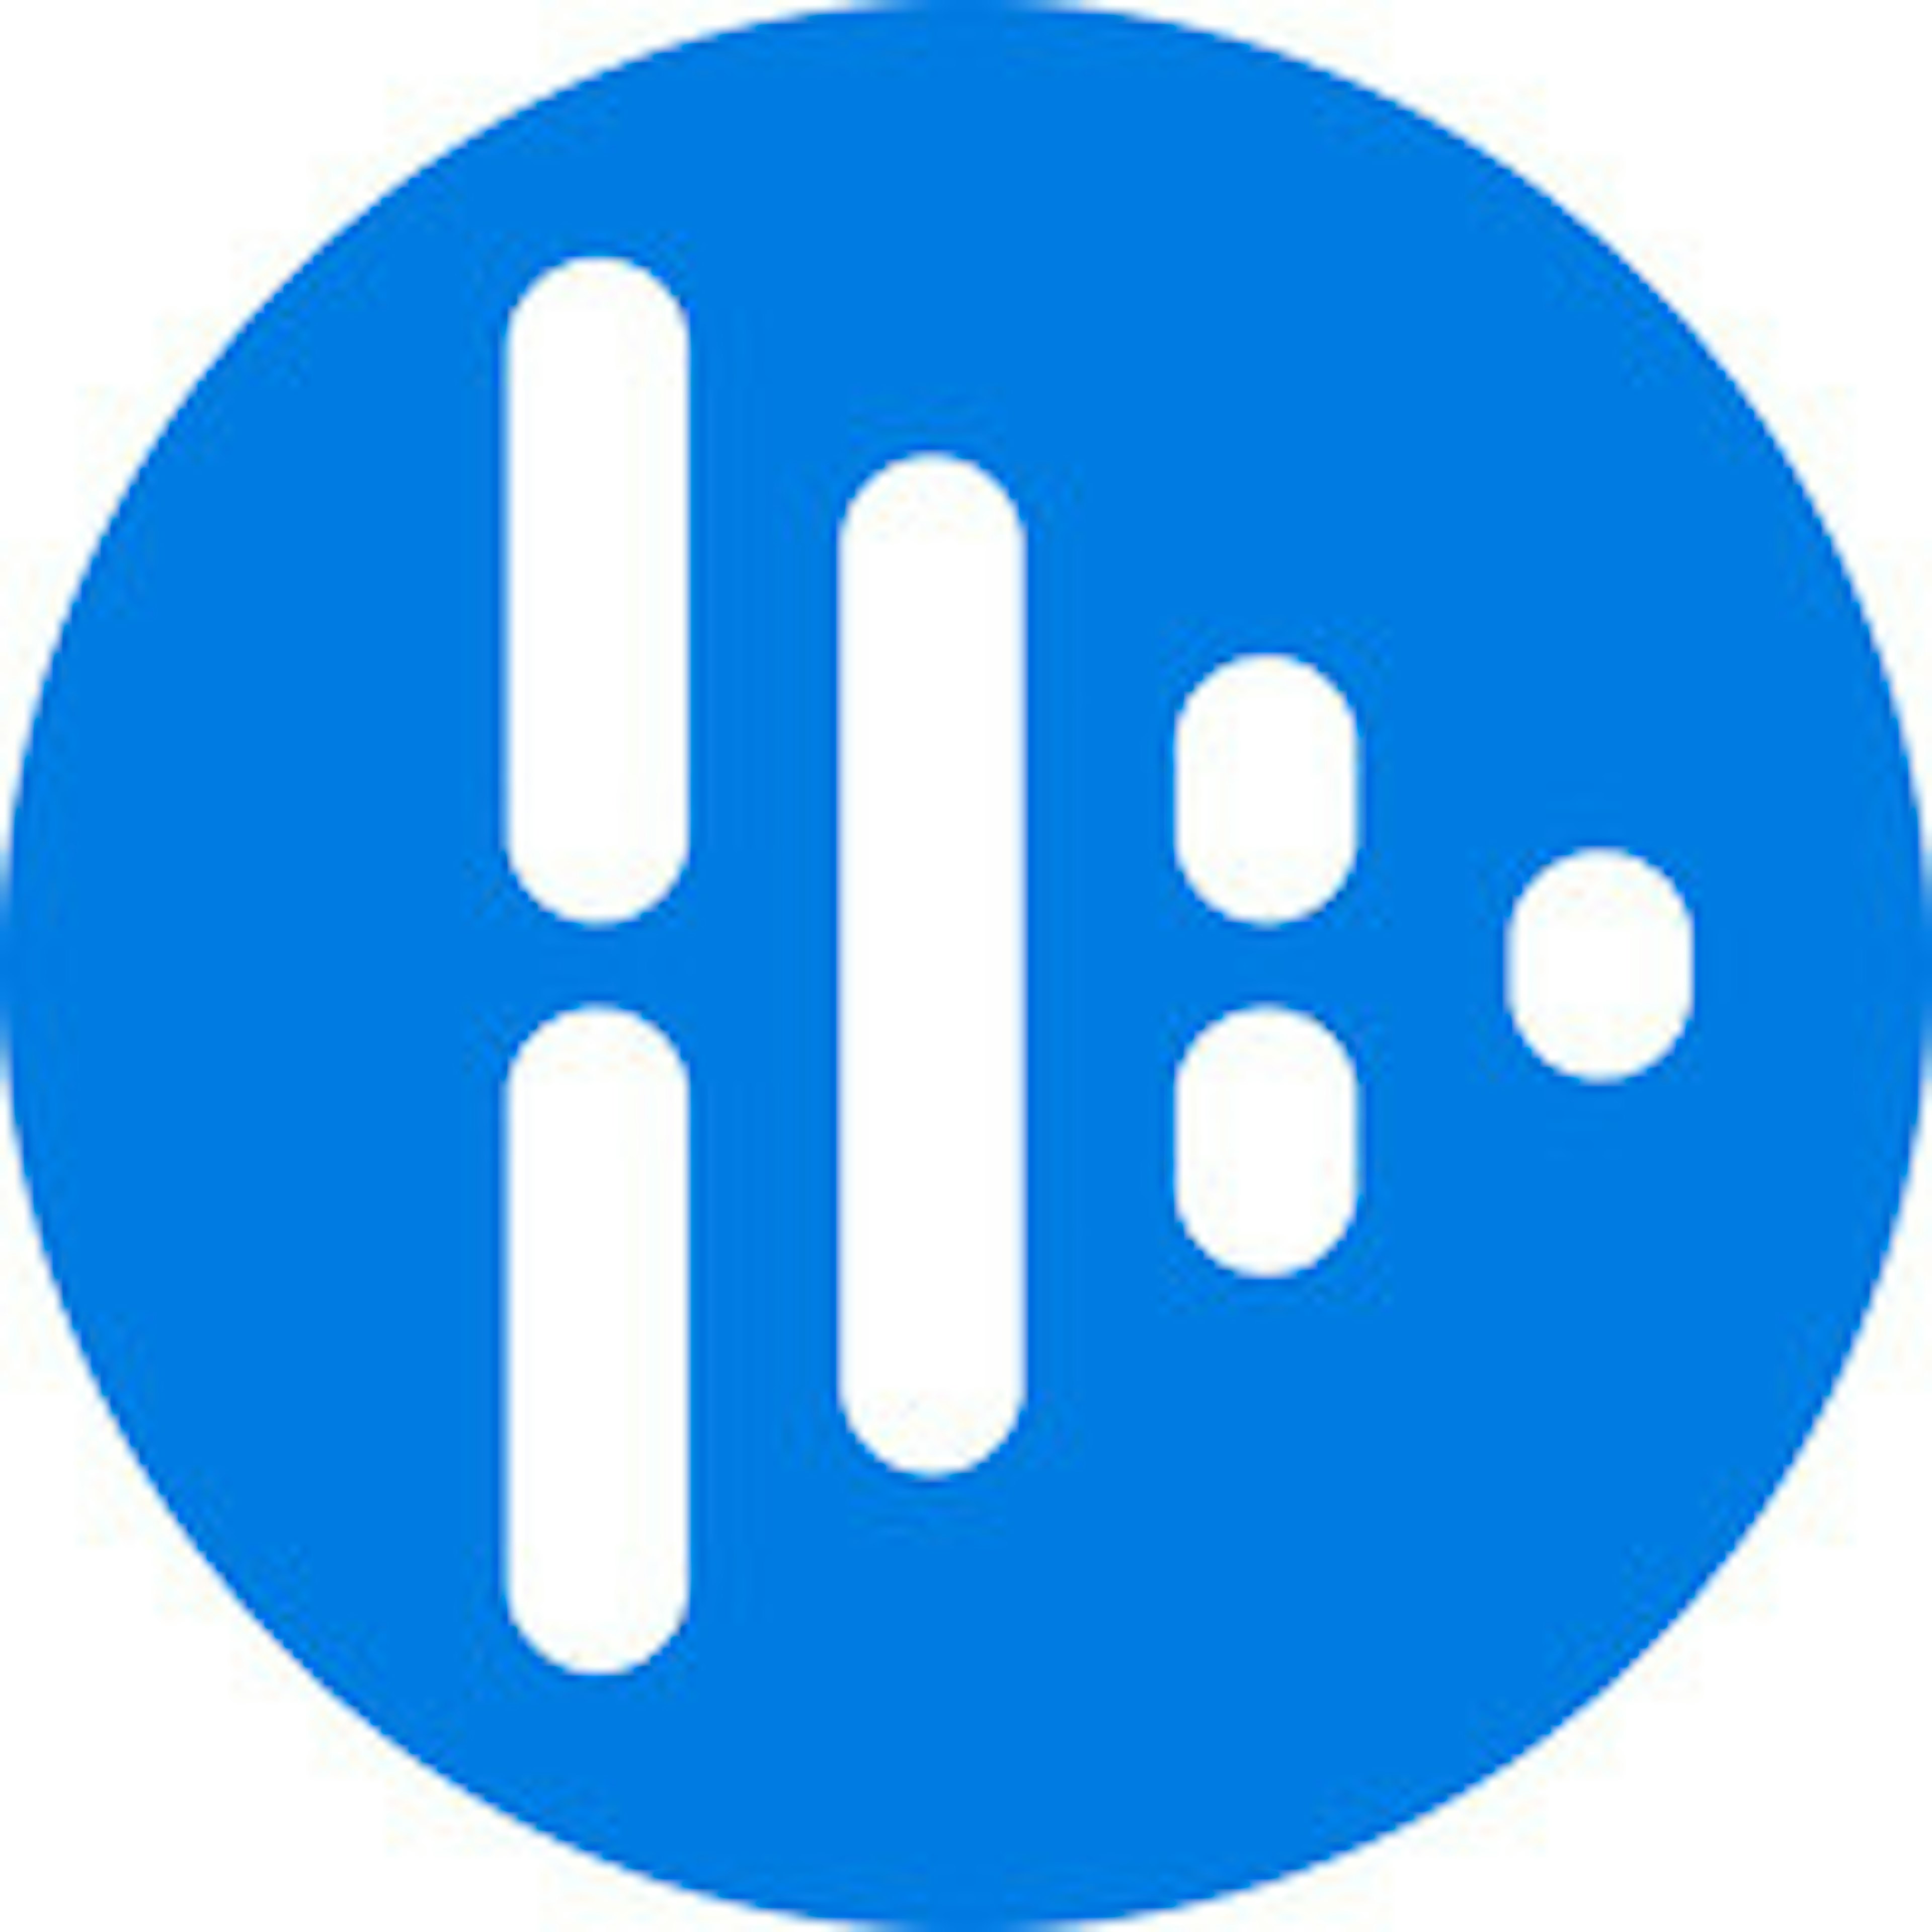 Audioboom Logo